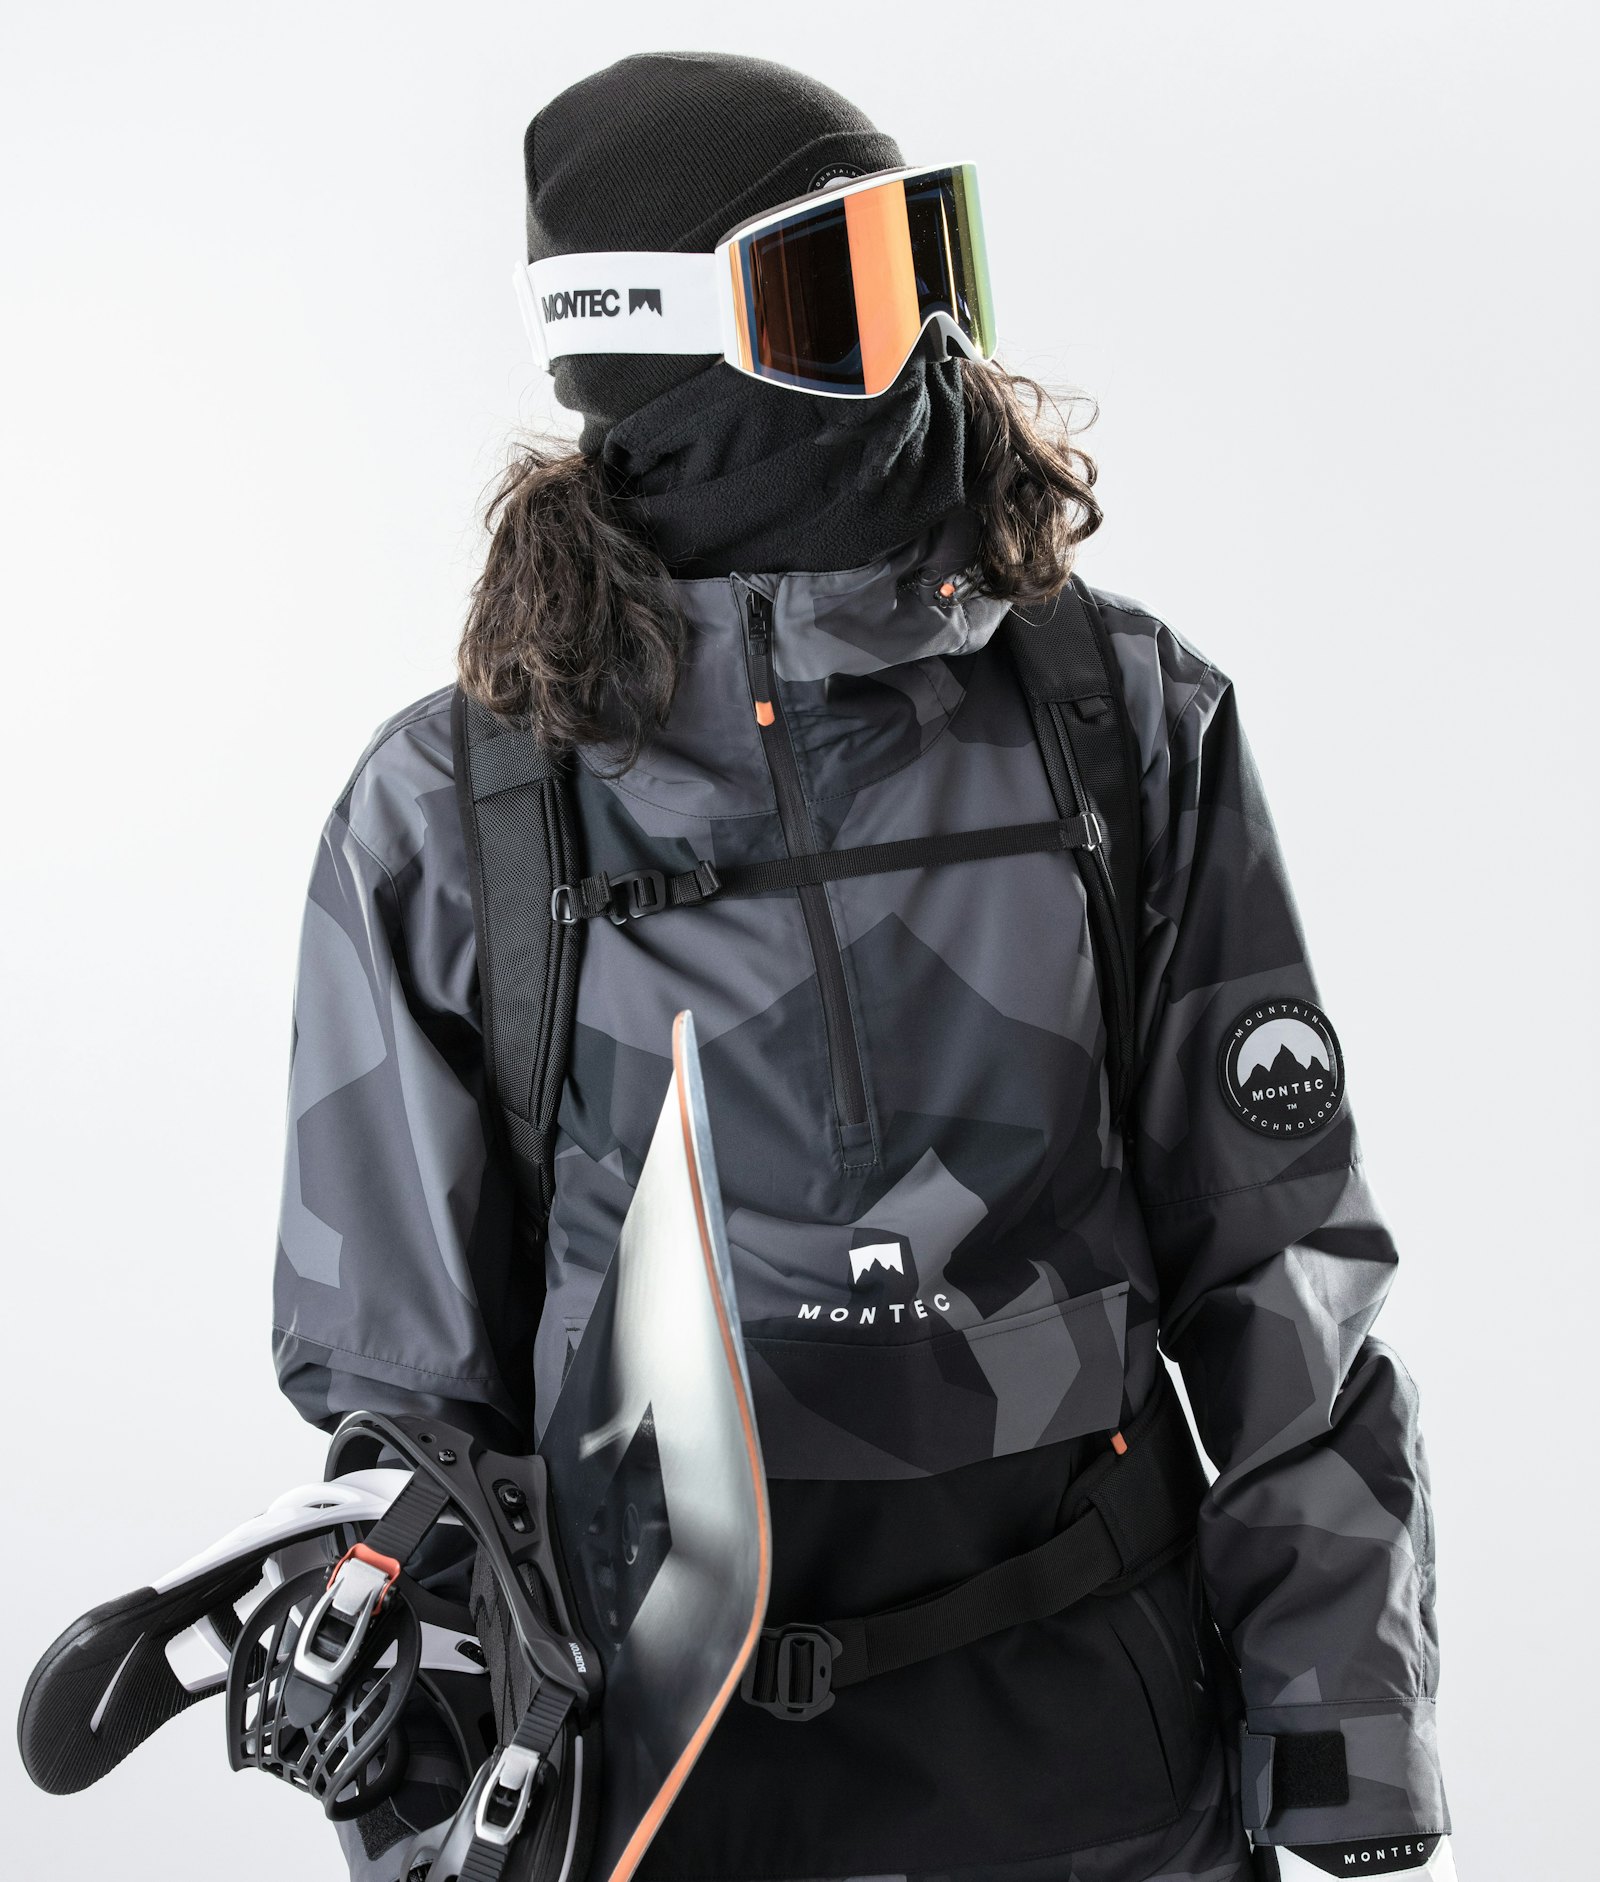 Typhoon 2020 Veste Snowboard Homme Night Camo/Black